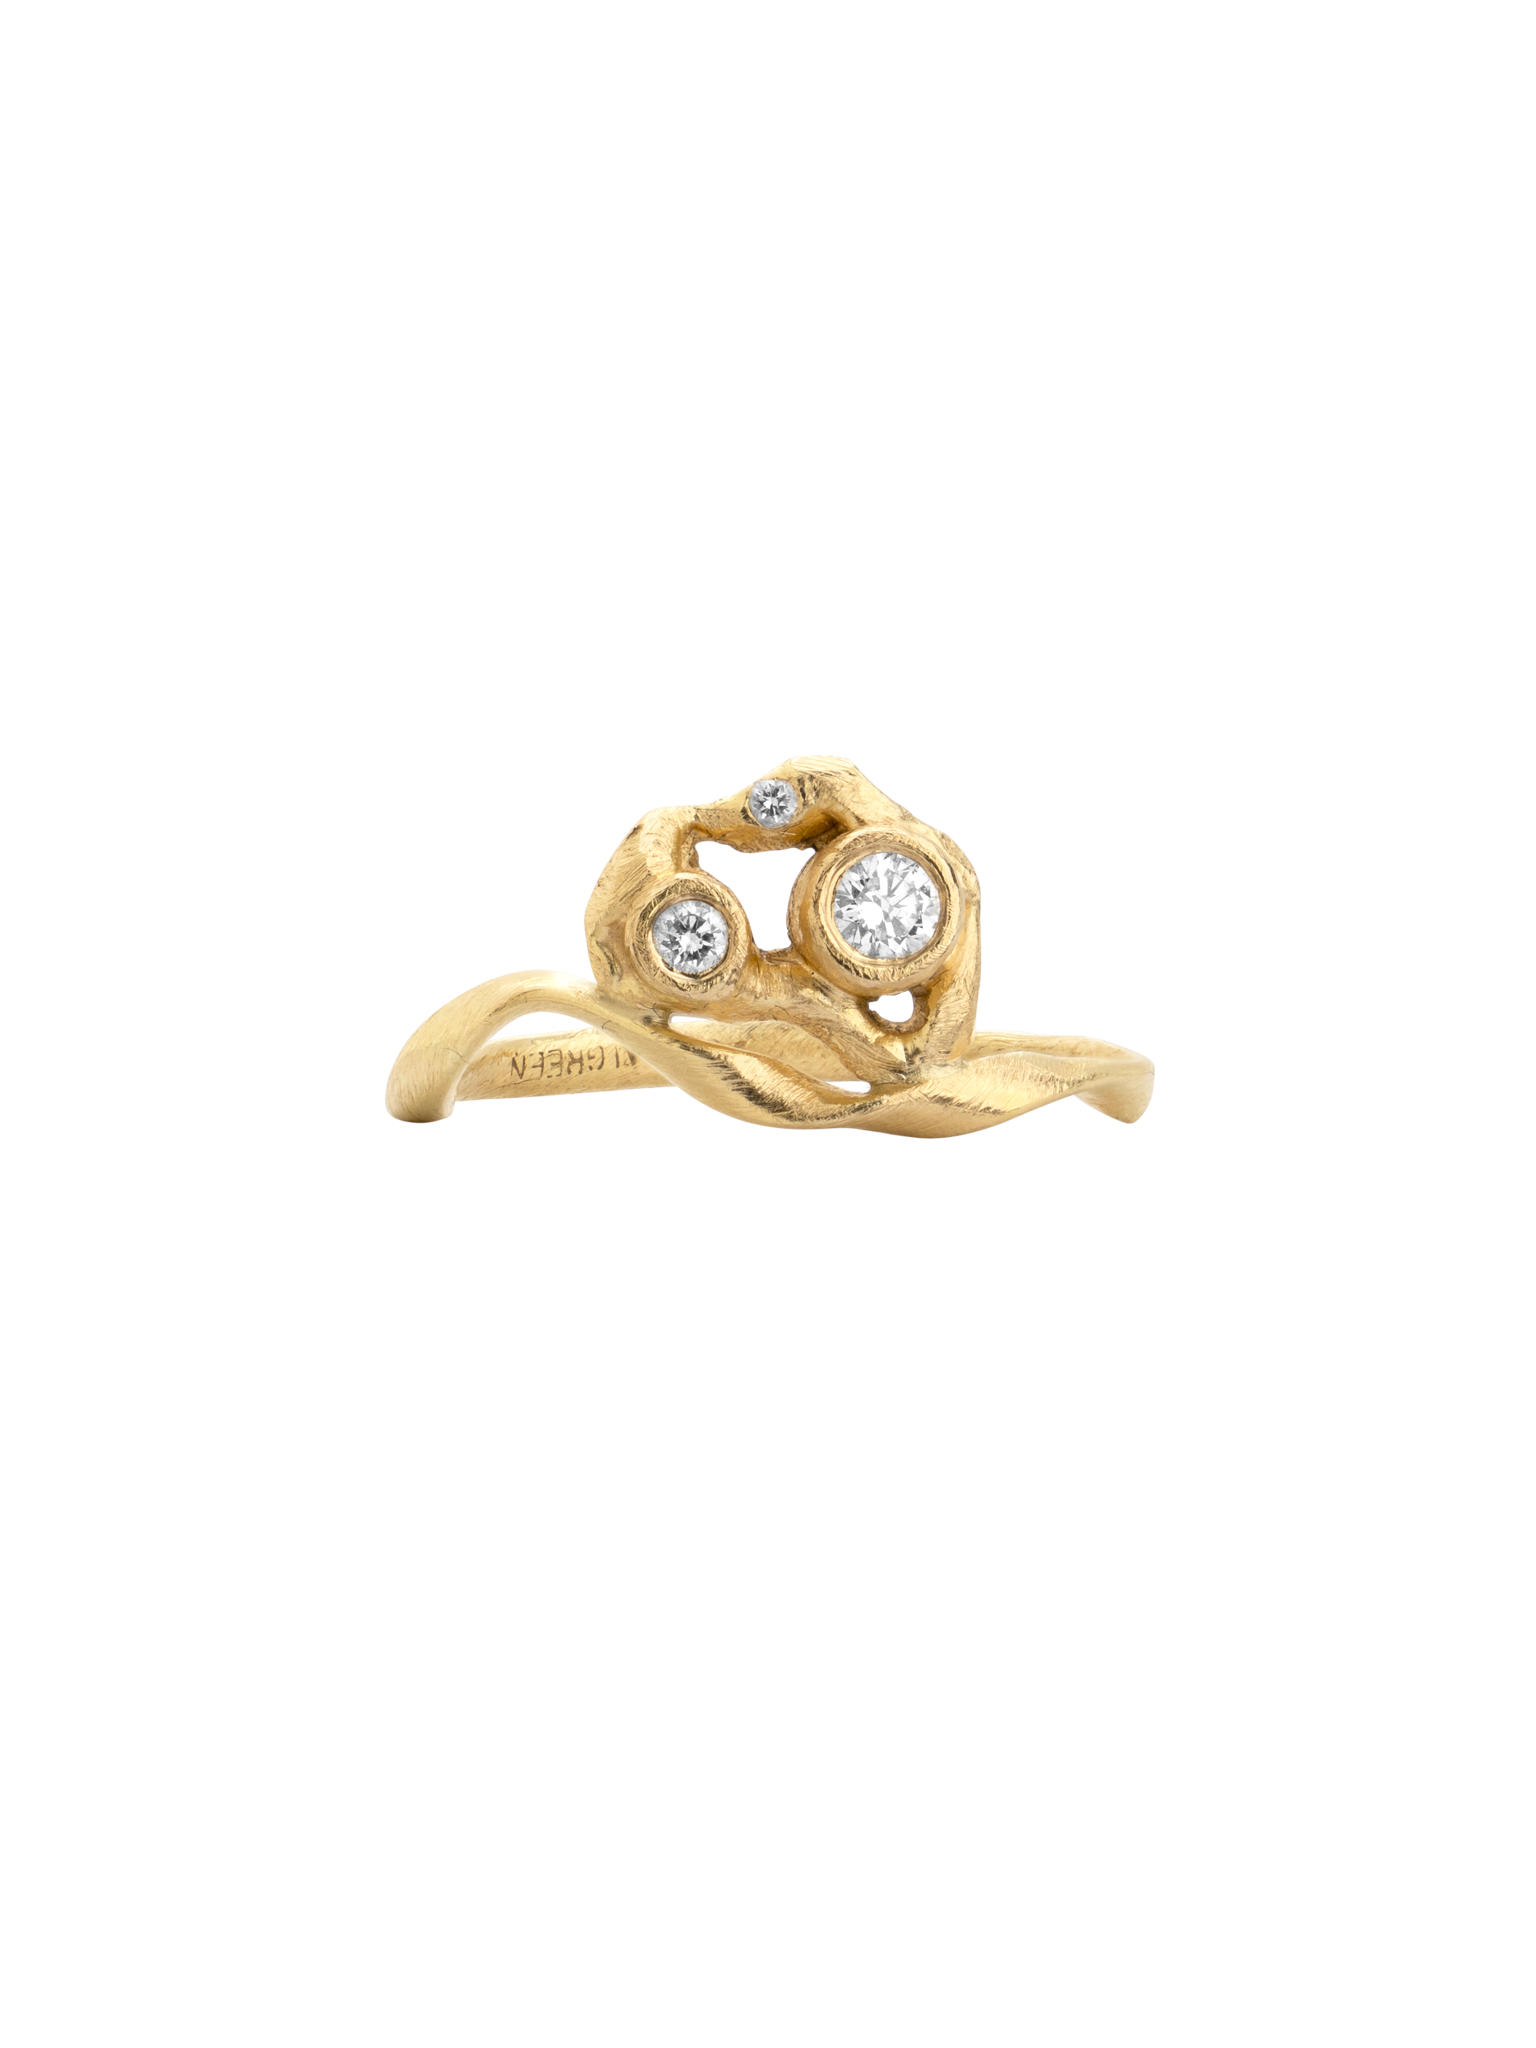 Flair ring with 3 Australian diamonds